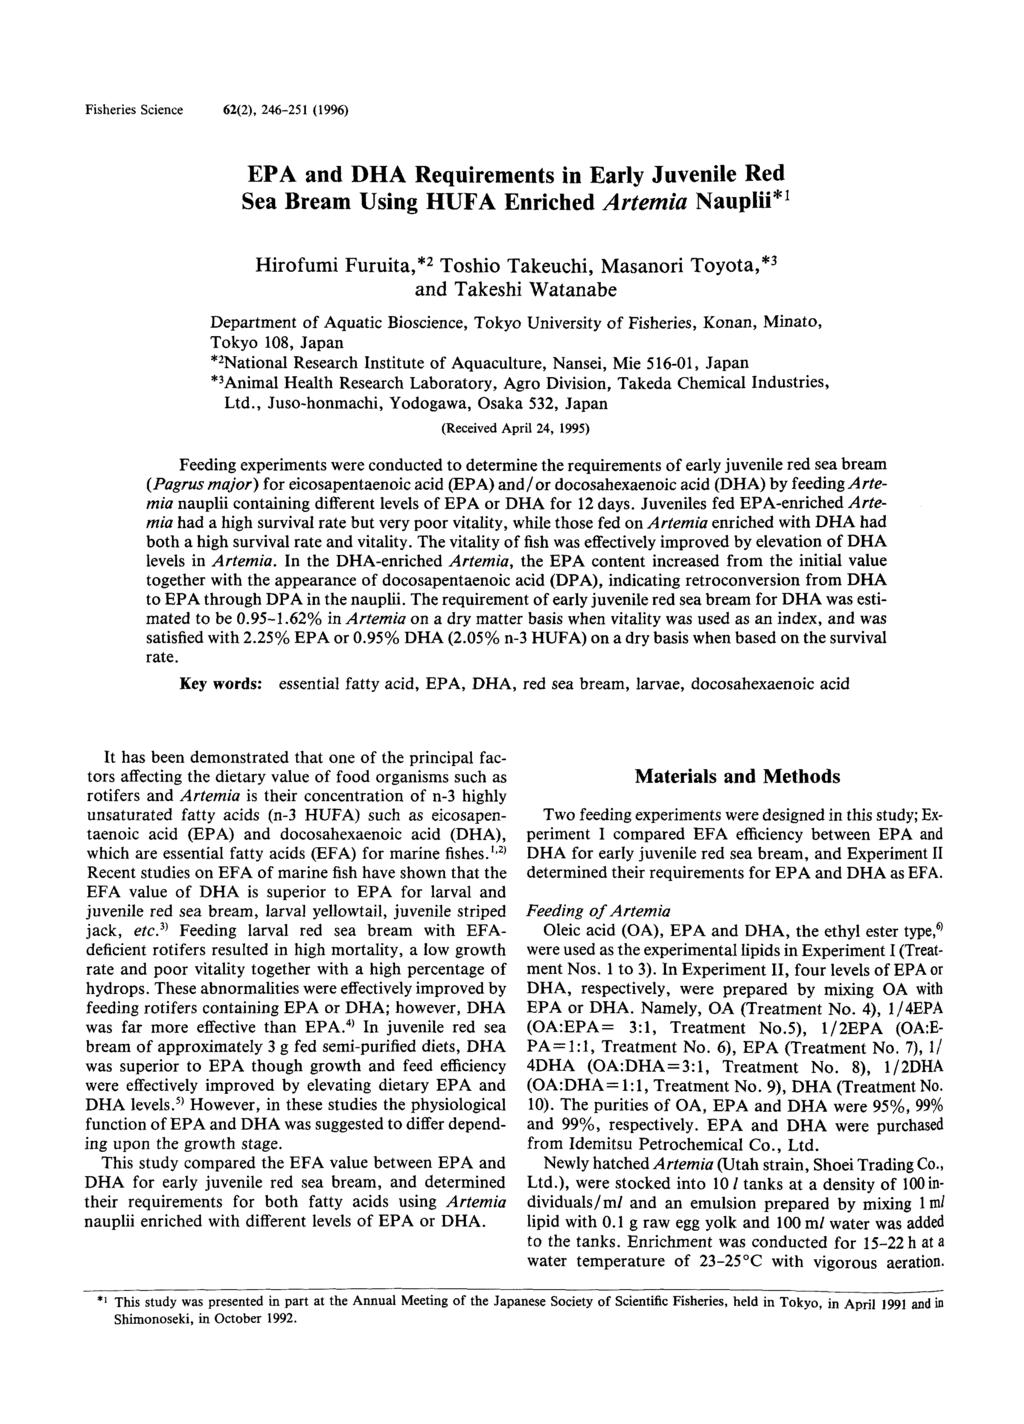 Fisheries Science 62(2), 246-251 (1996) EPA and DHA Requirements in Early Juvenile Red Sea Bream Using HUFA Enriched Artemia Nauplii*1 Hirofumi Furuita,*2 Toshio Takeuchi, Masanori Toyota,*3 and